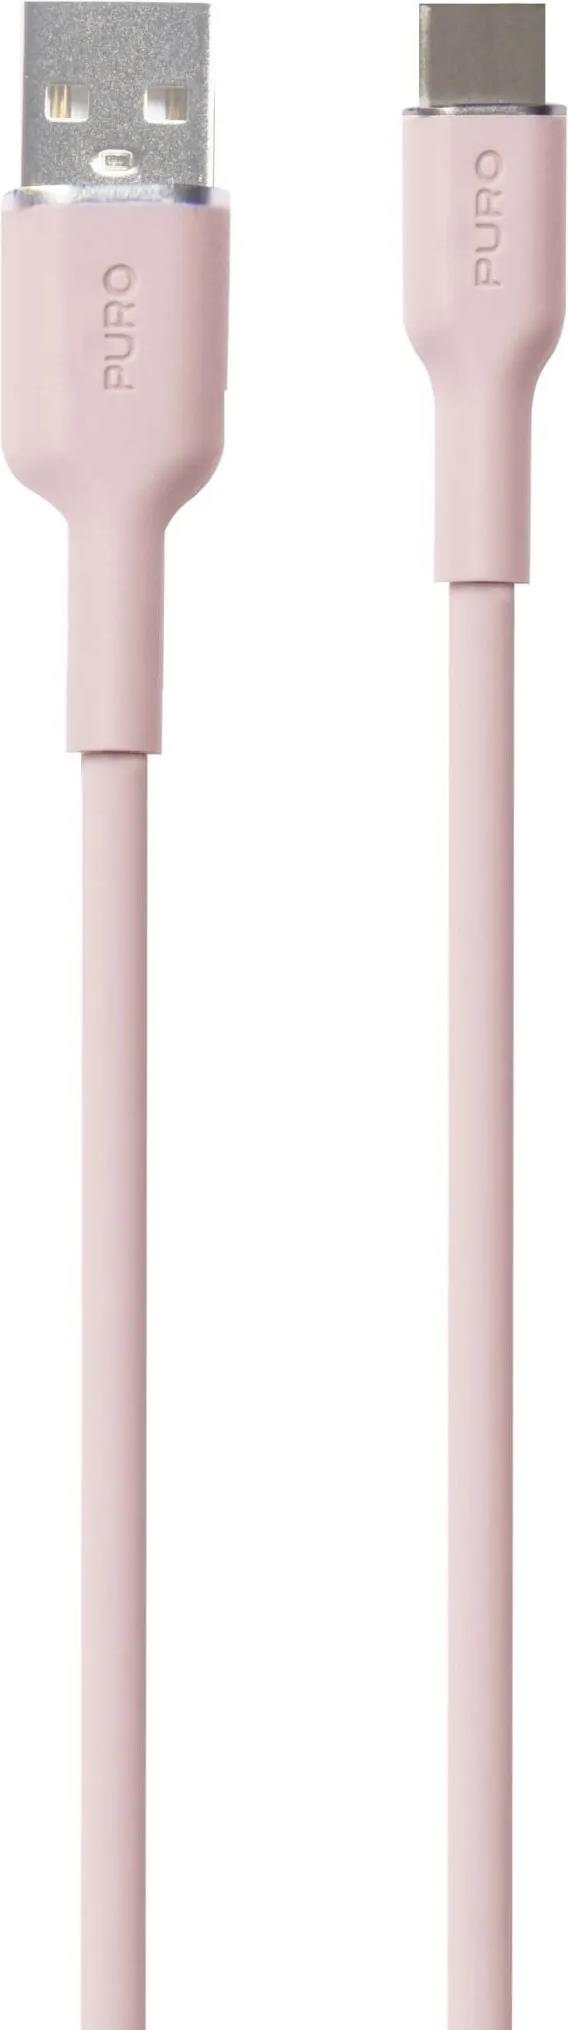 PURO PUUSBCICONROSE. Kabellänge: 1,5 m, Anschluss 1: USB A, Anschluss 2: USB C, USB-Version: USB 3.2 Gen 1 (3.1 Gen 1), Produktfarbe: Pink (PUUSBCICONROSE)